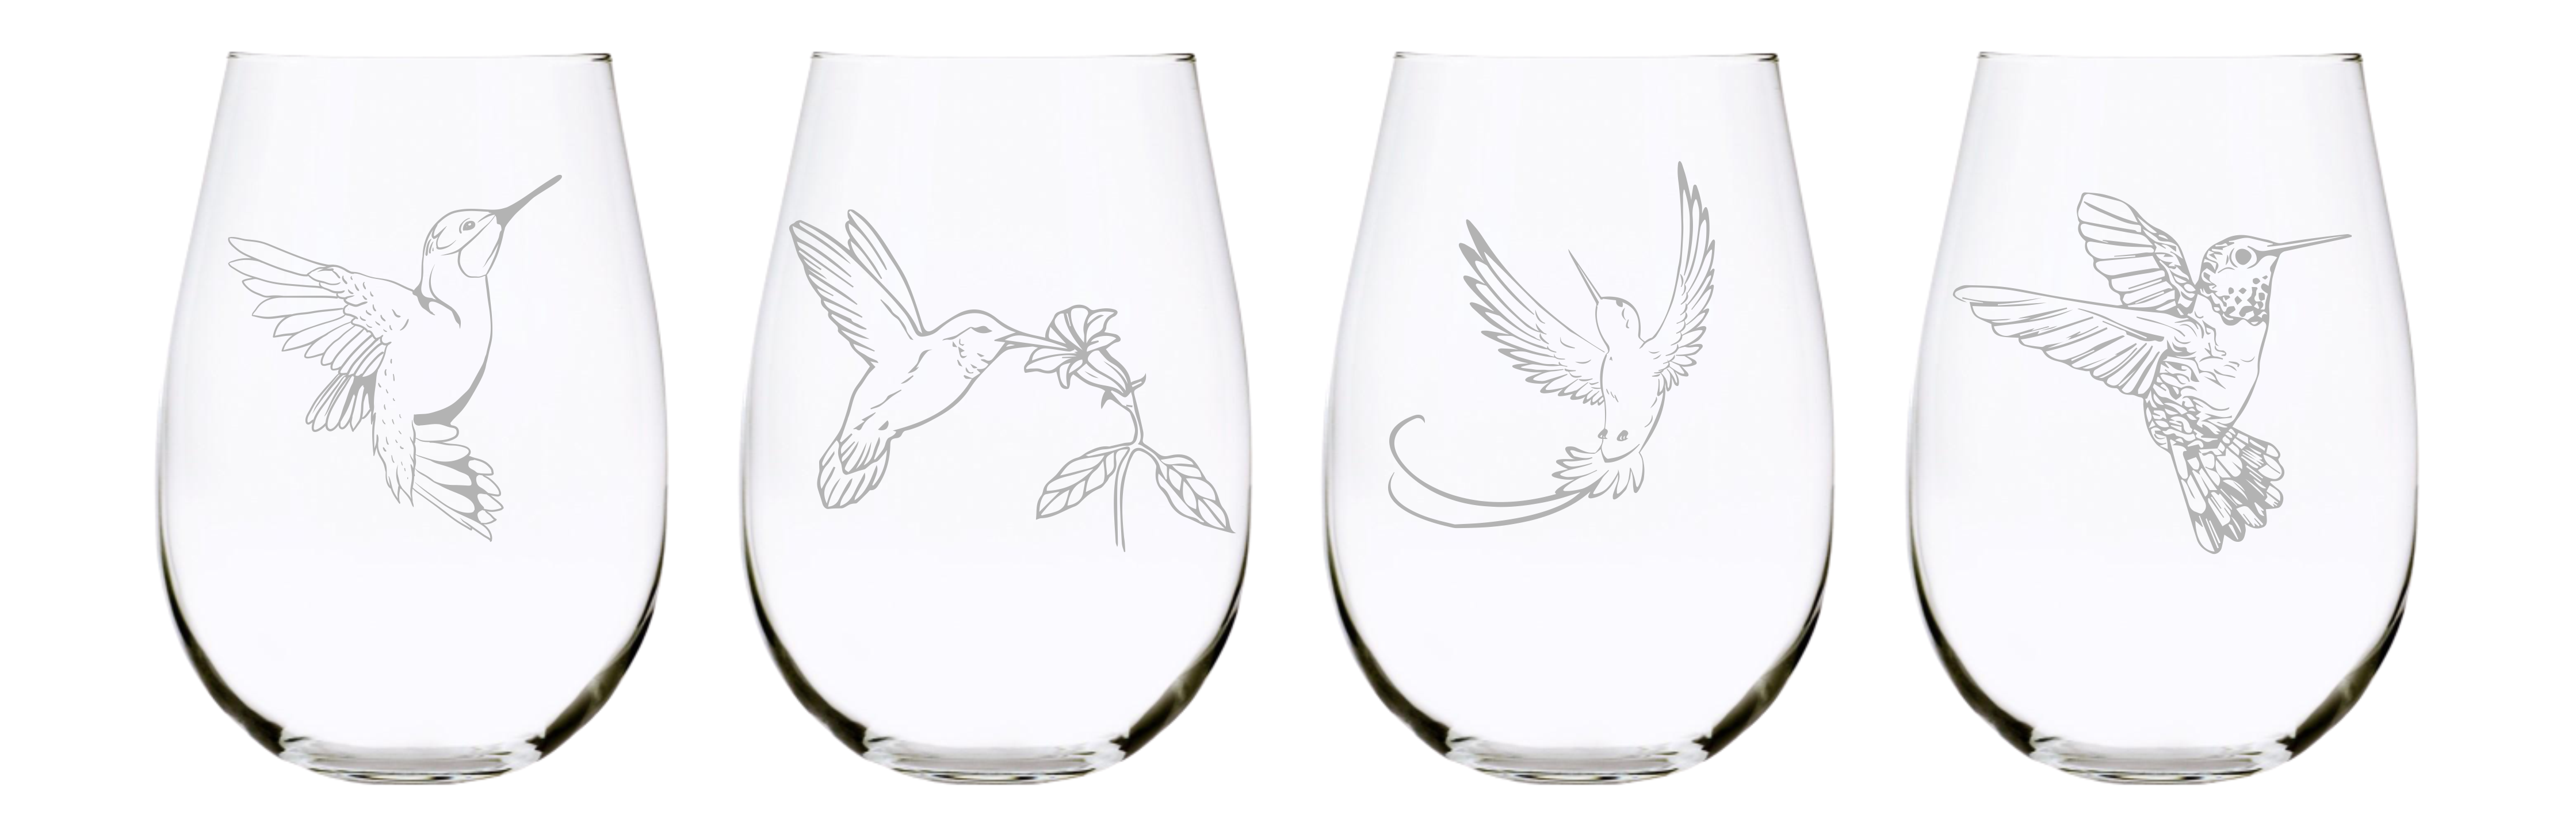 Hummingbird Wine Glasses, Set of Two